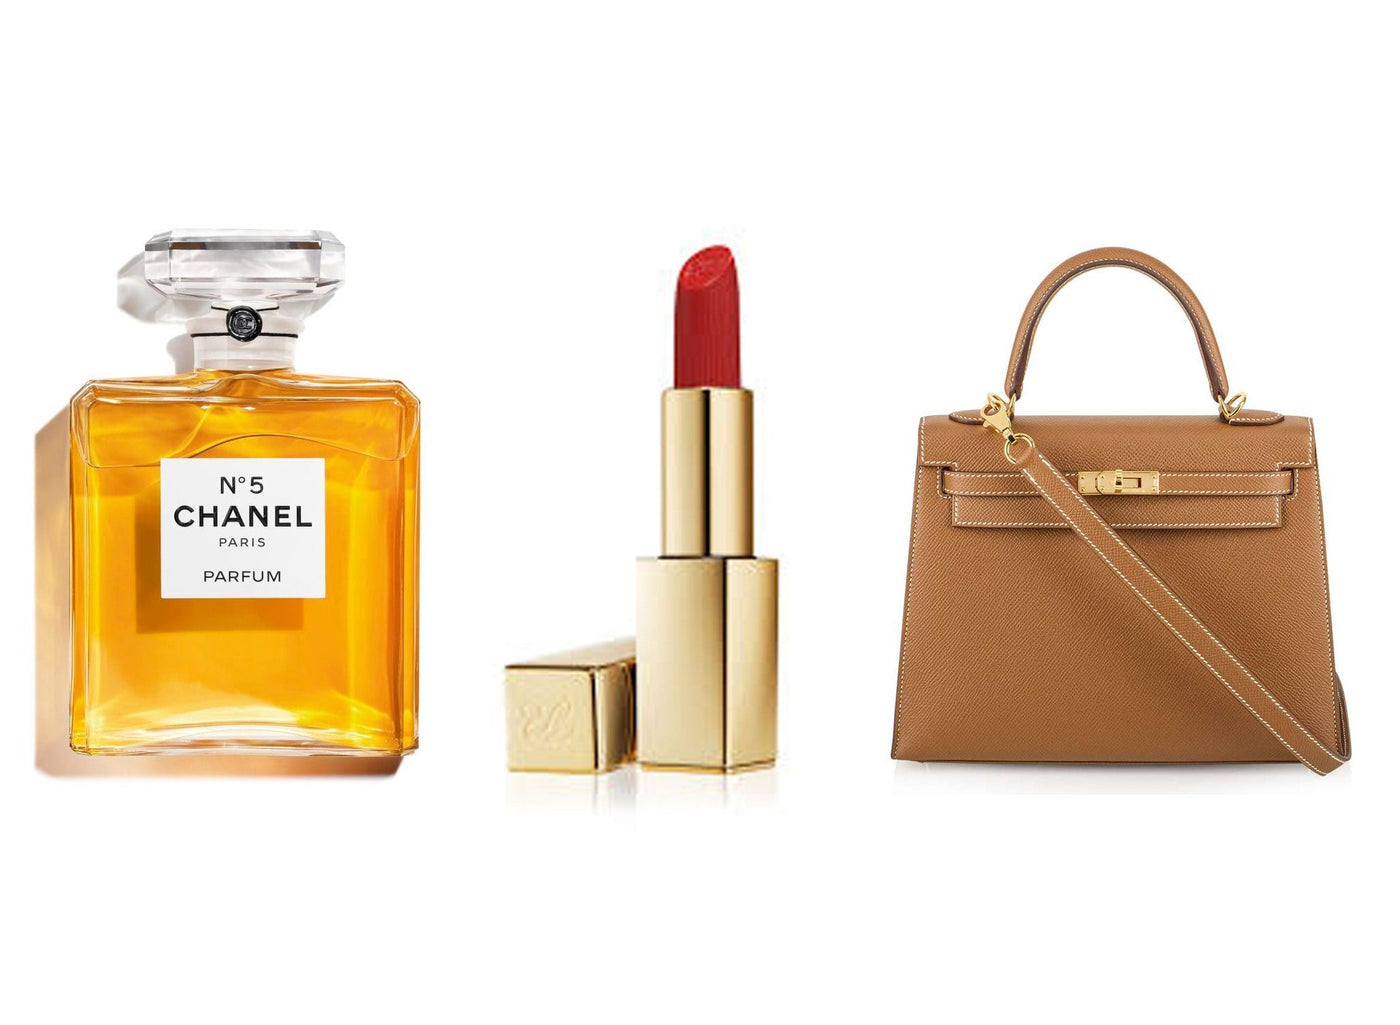 chanel No 5 perfume bottle, red lipstick, hermes handbag